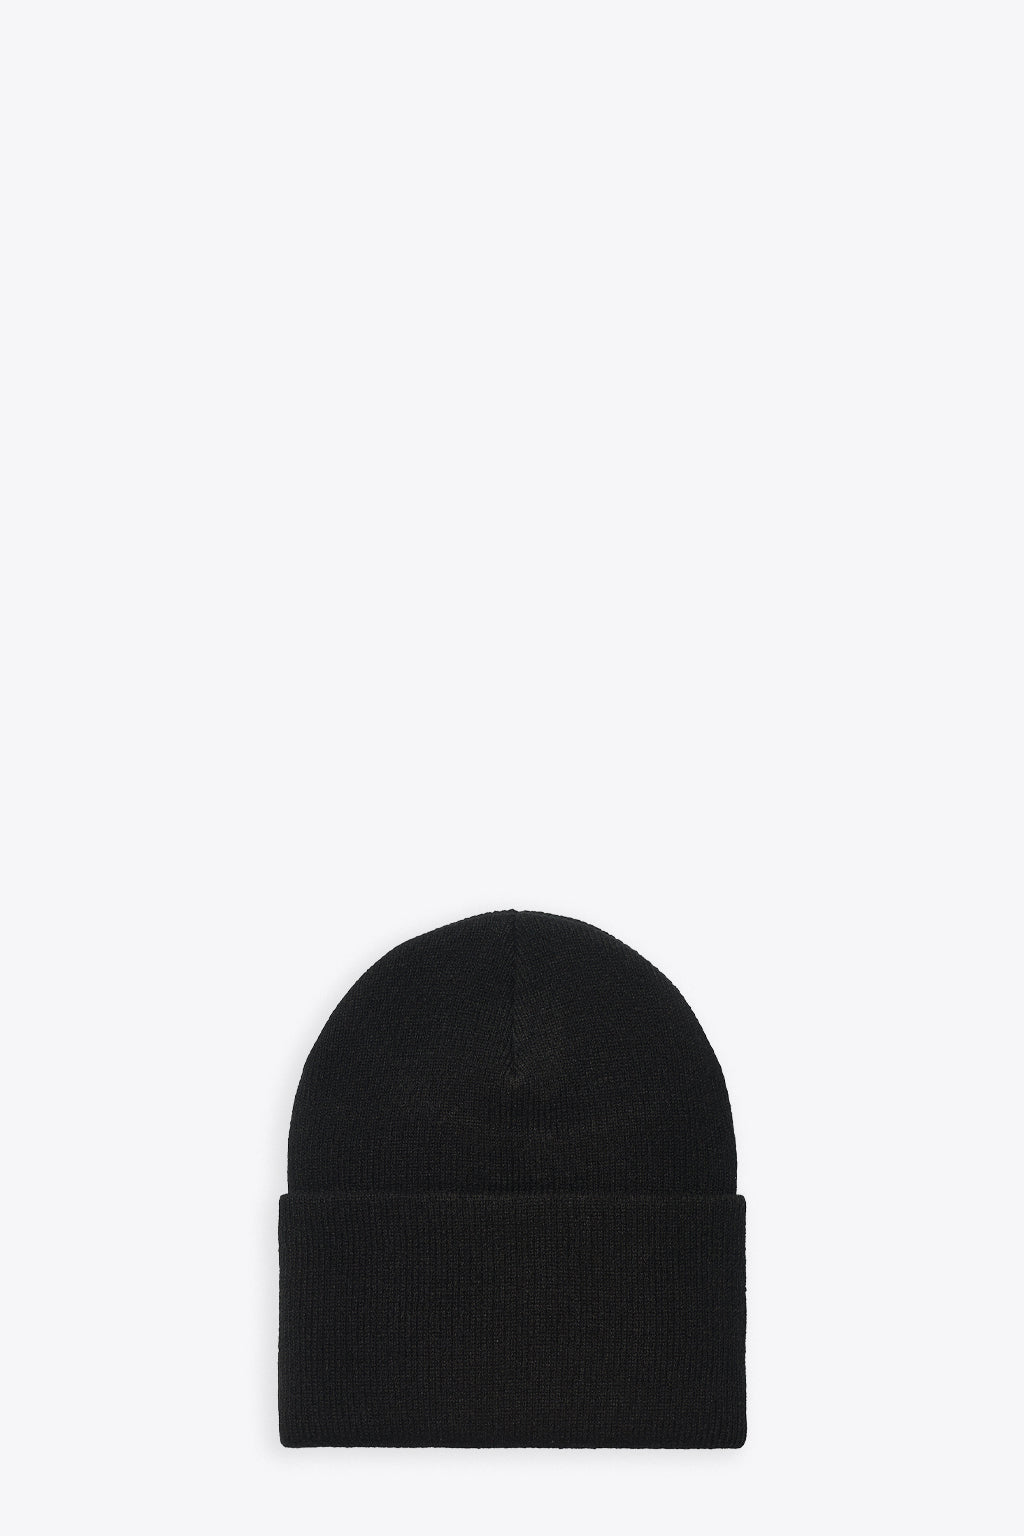 alt-image__Black-ribbed-beanie-with-logo---Acrylic-Watch-Hat